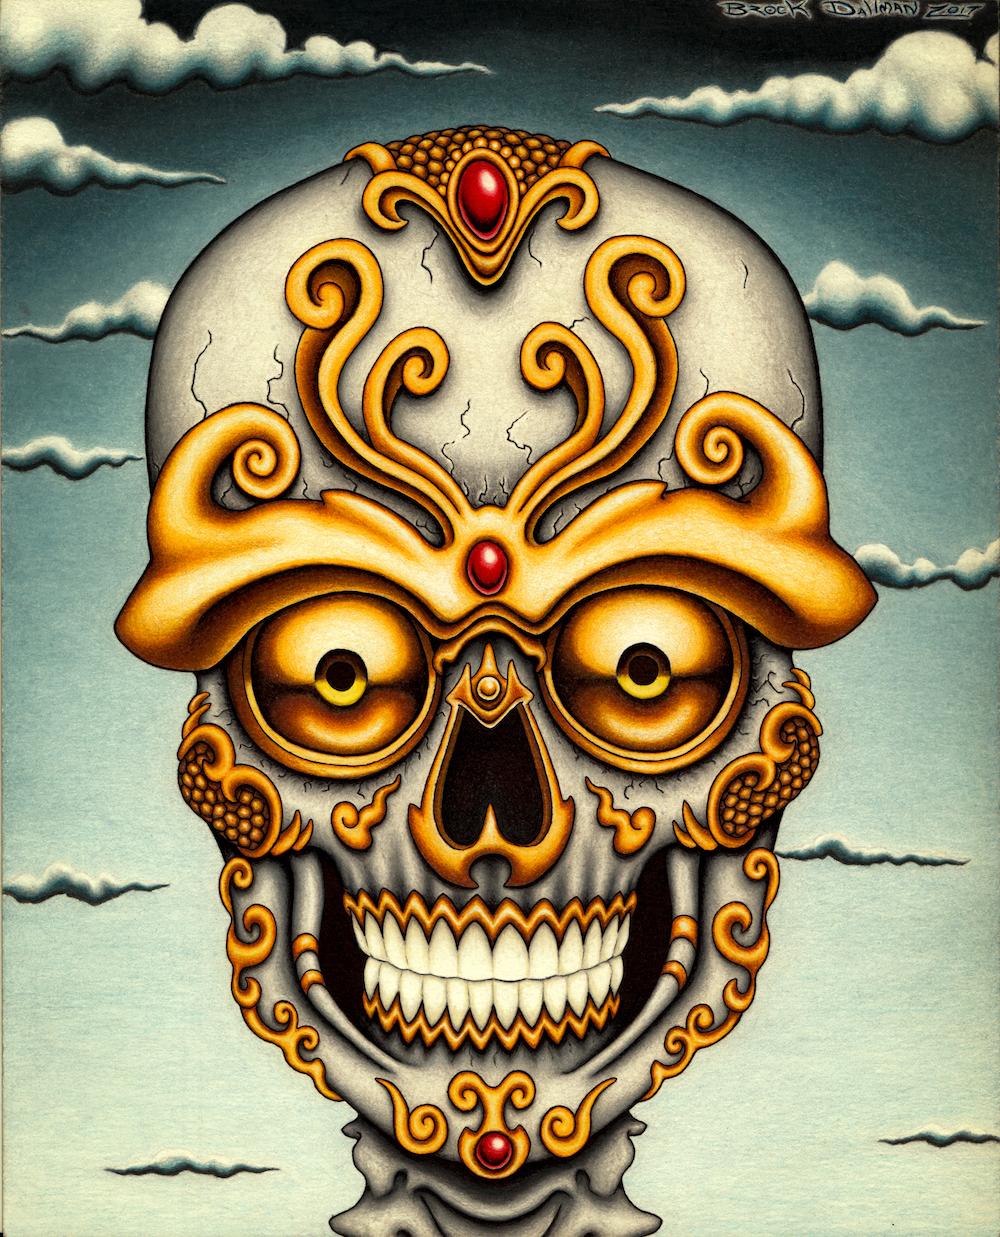 Tibetan Skull by Brock Dallman